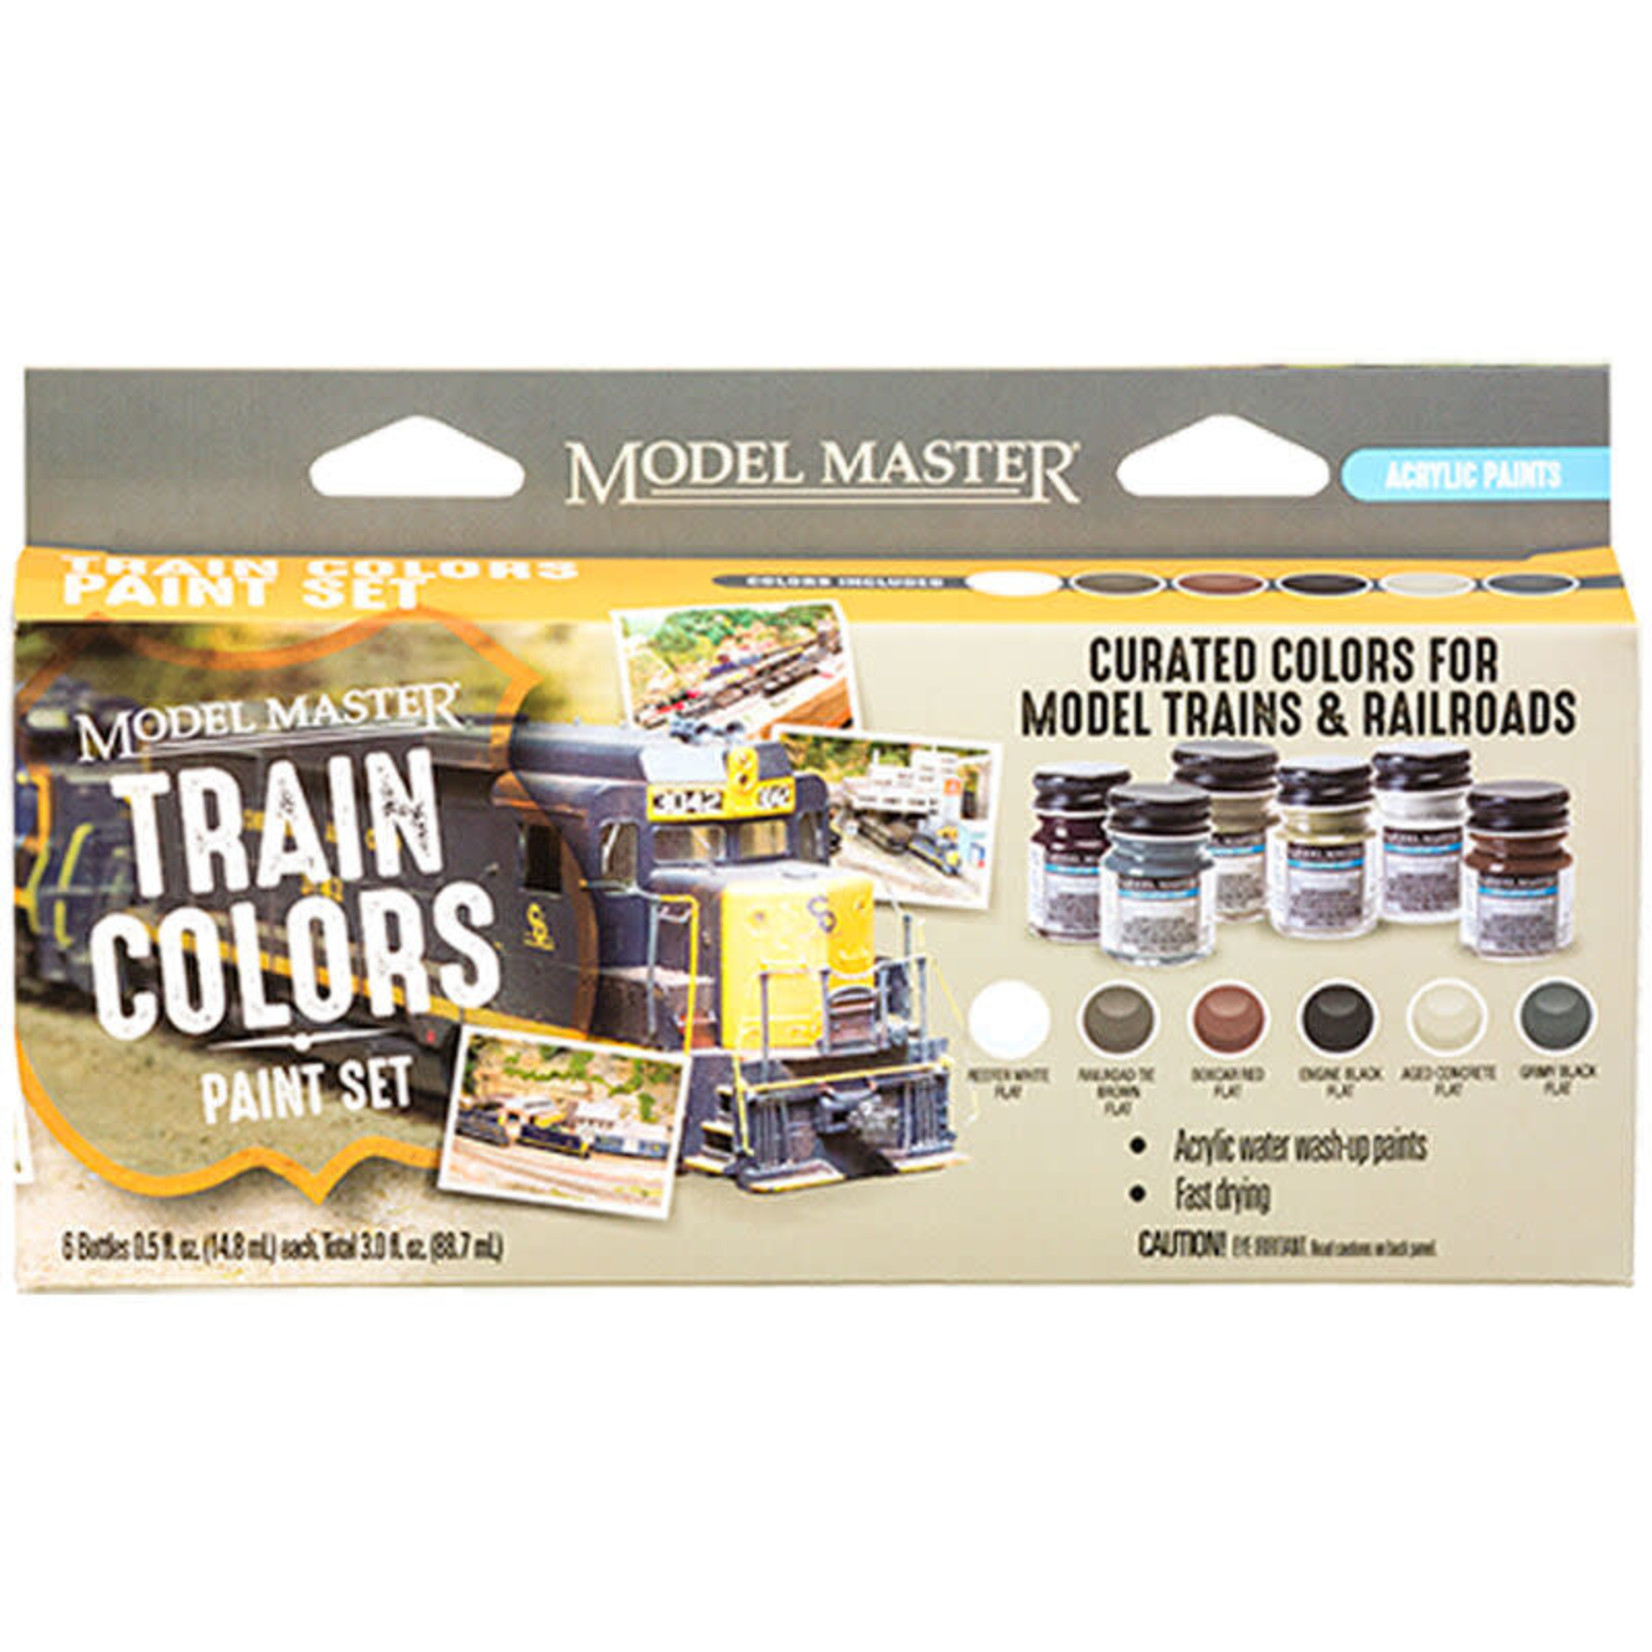 Model Master Model Master Train Colors Acrylic Paint (6) set